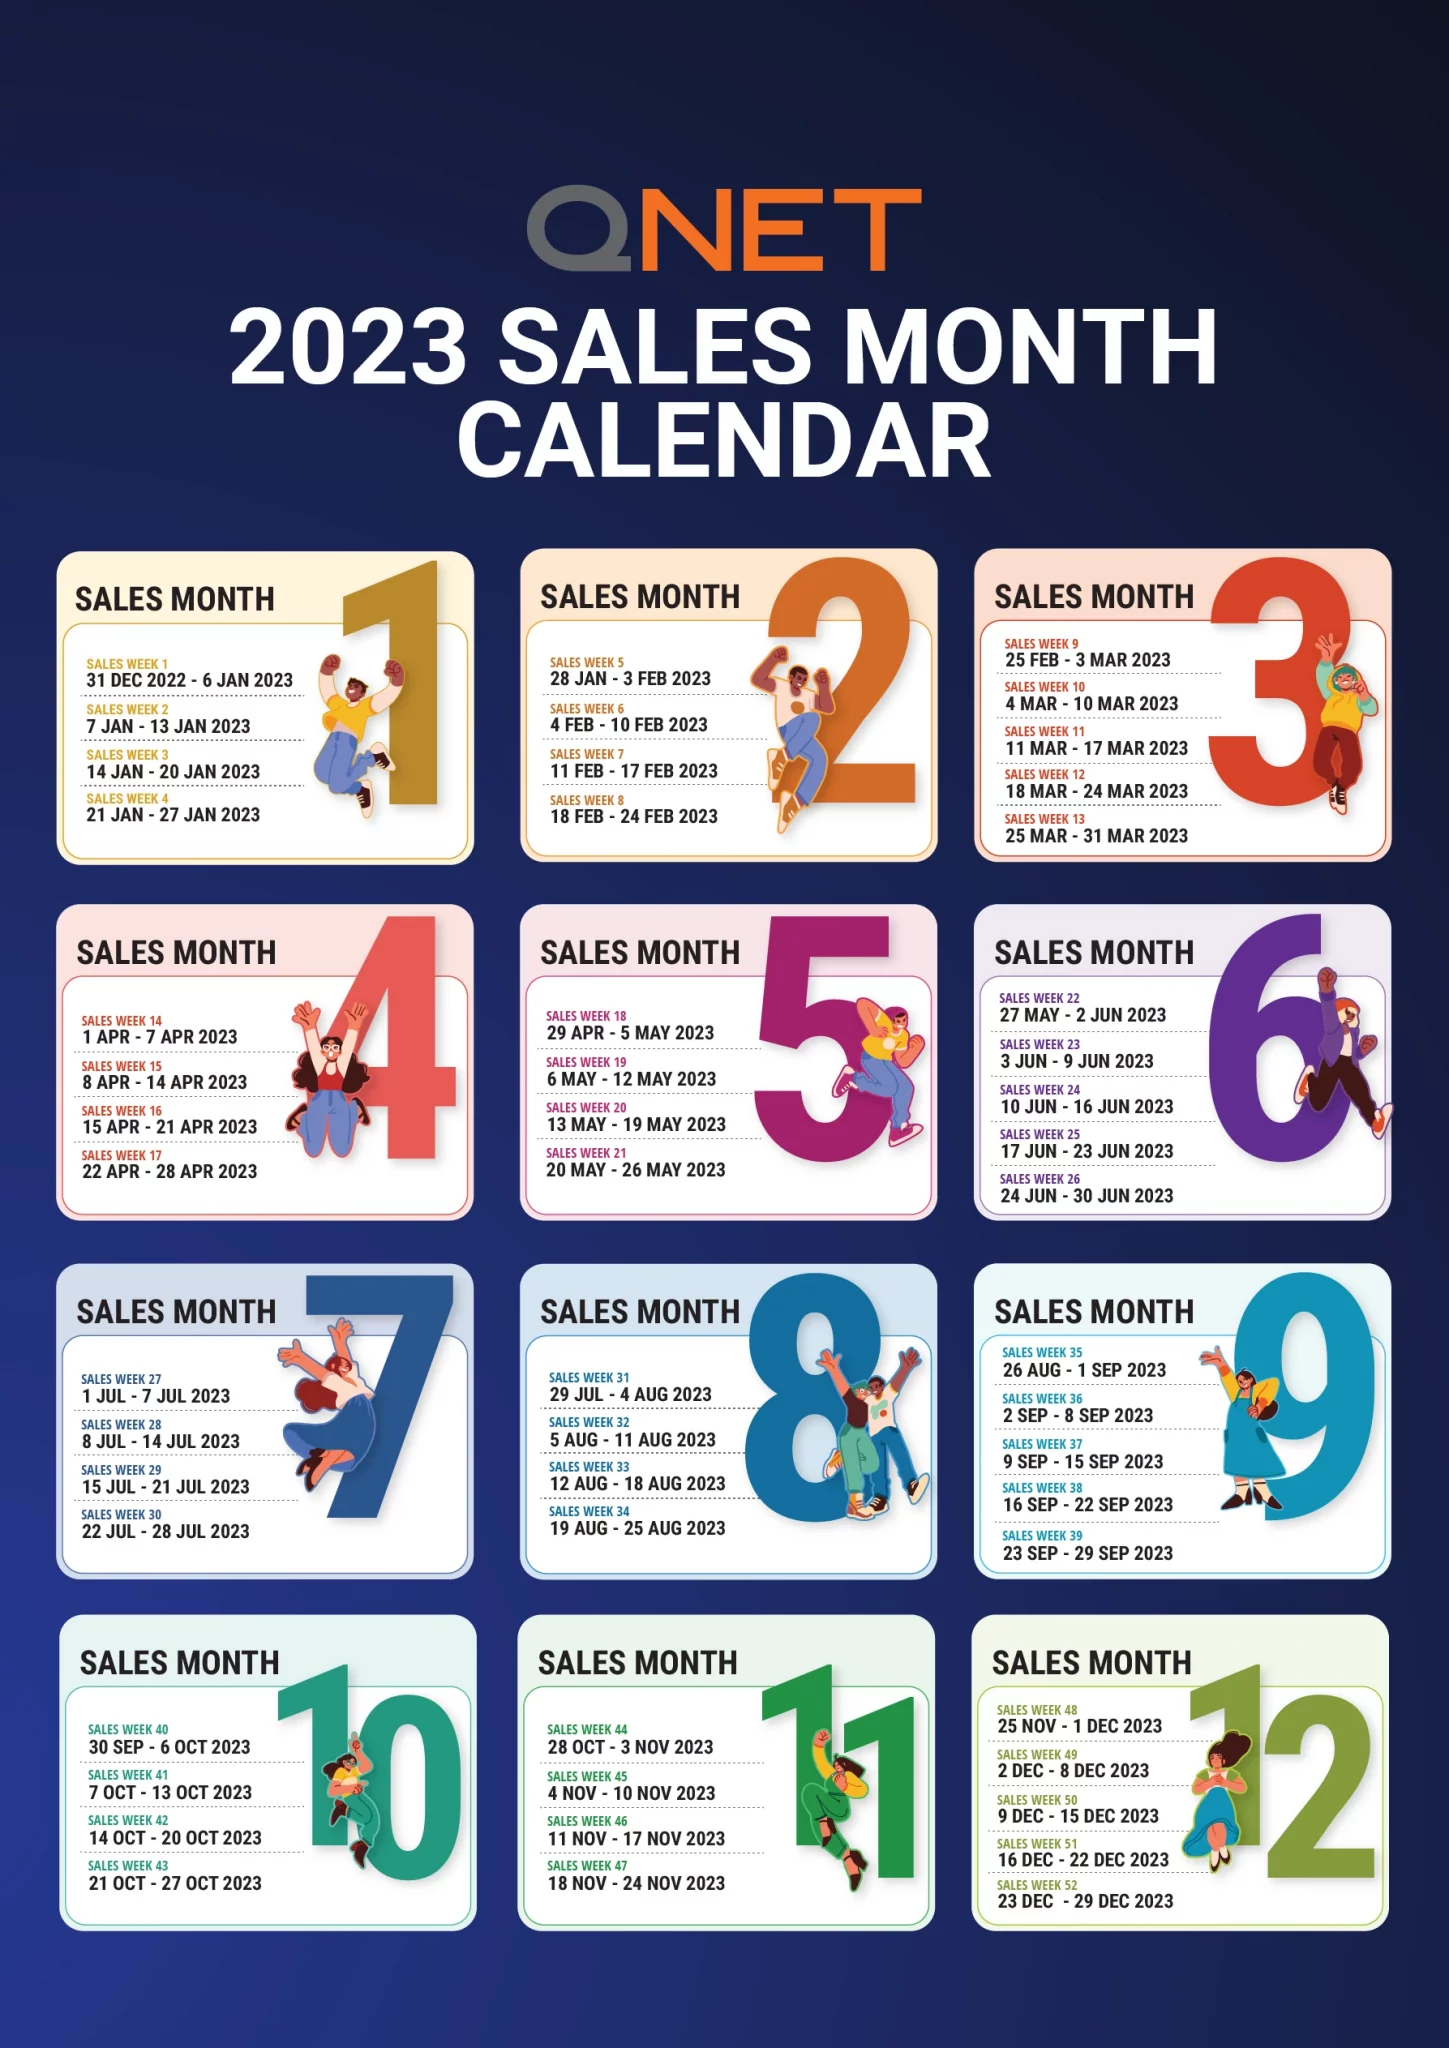 2023 QNET Sales Calendar | 2023 Business Trends